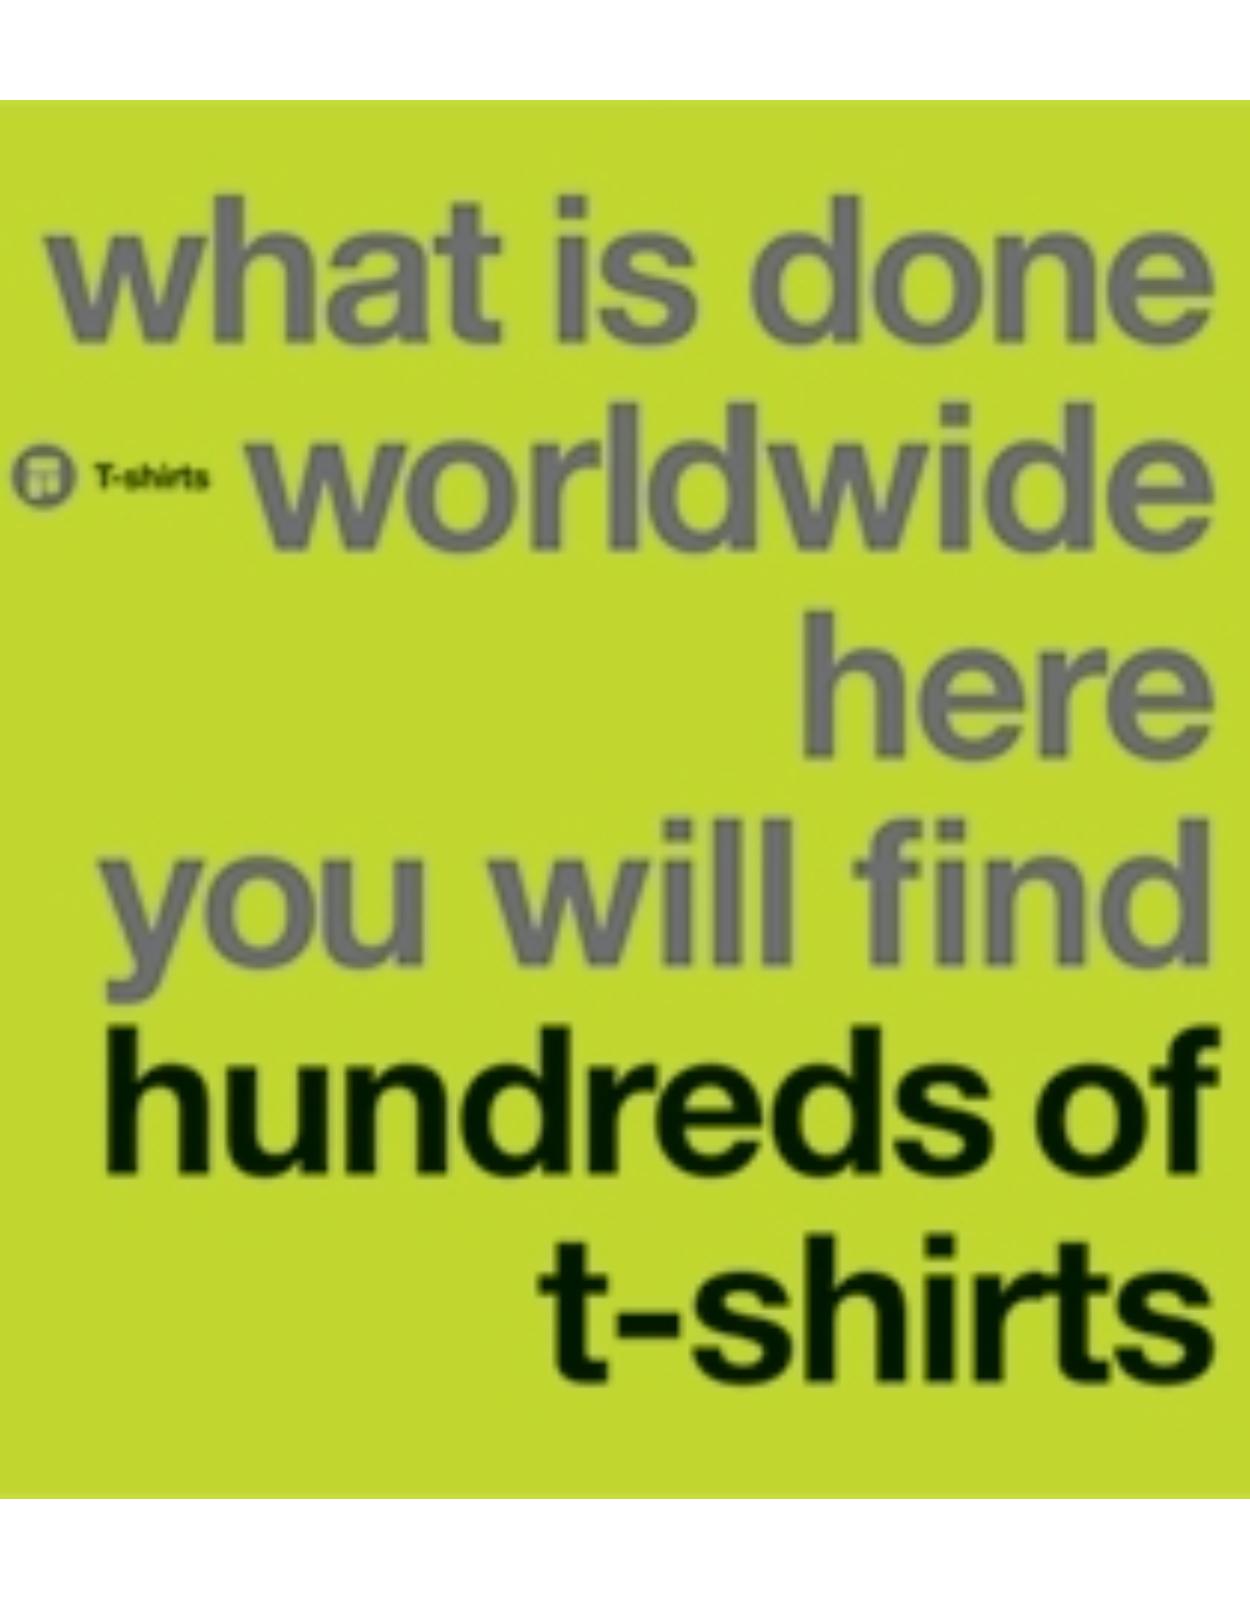 T-Shirts Worldwide